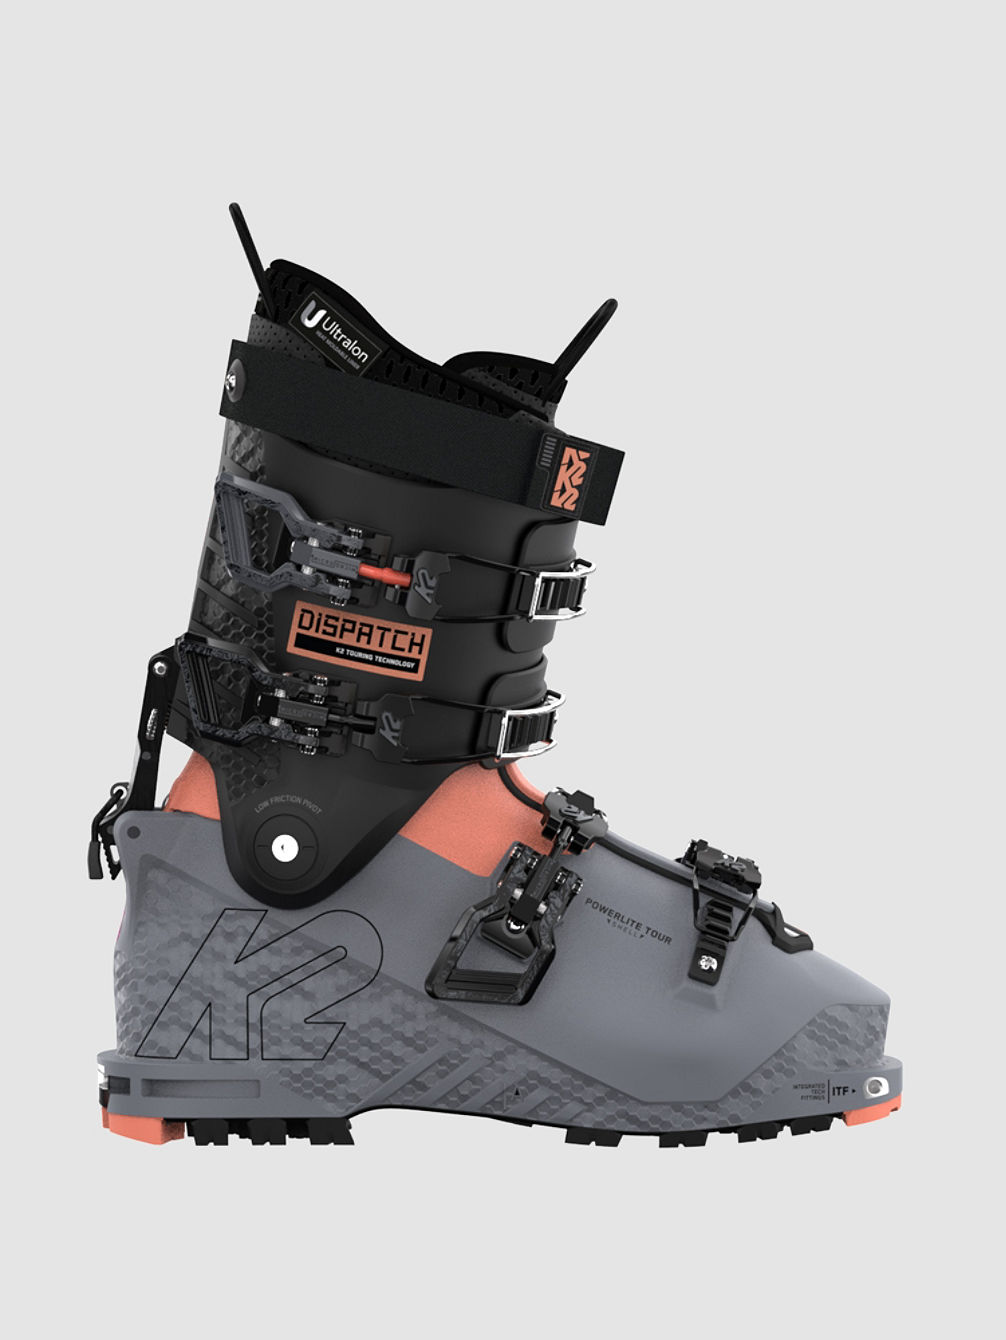 Dispatch 2023 Ski Boots